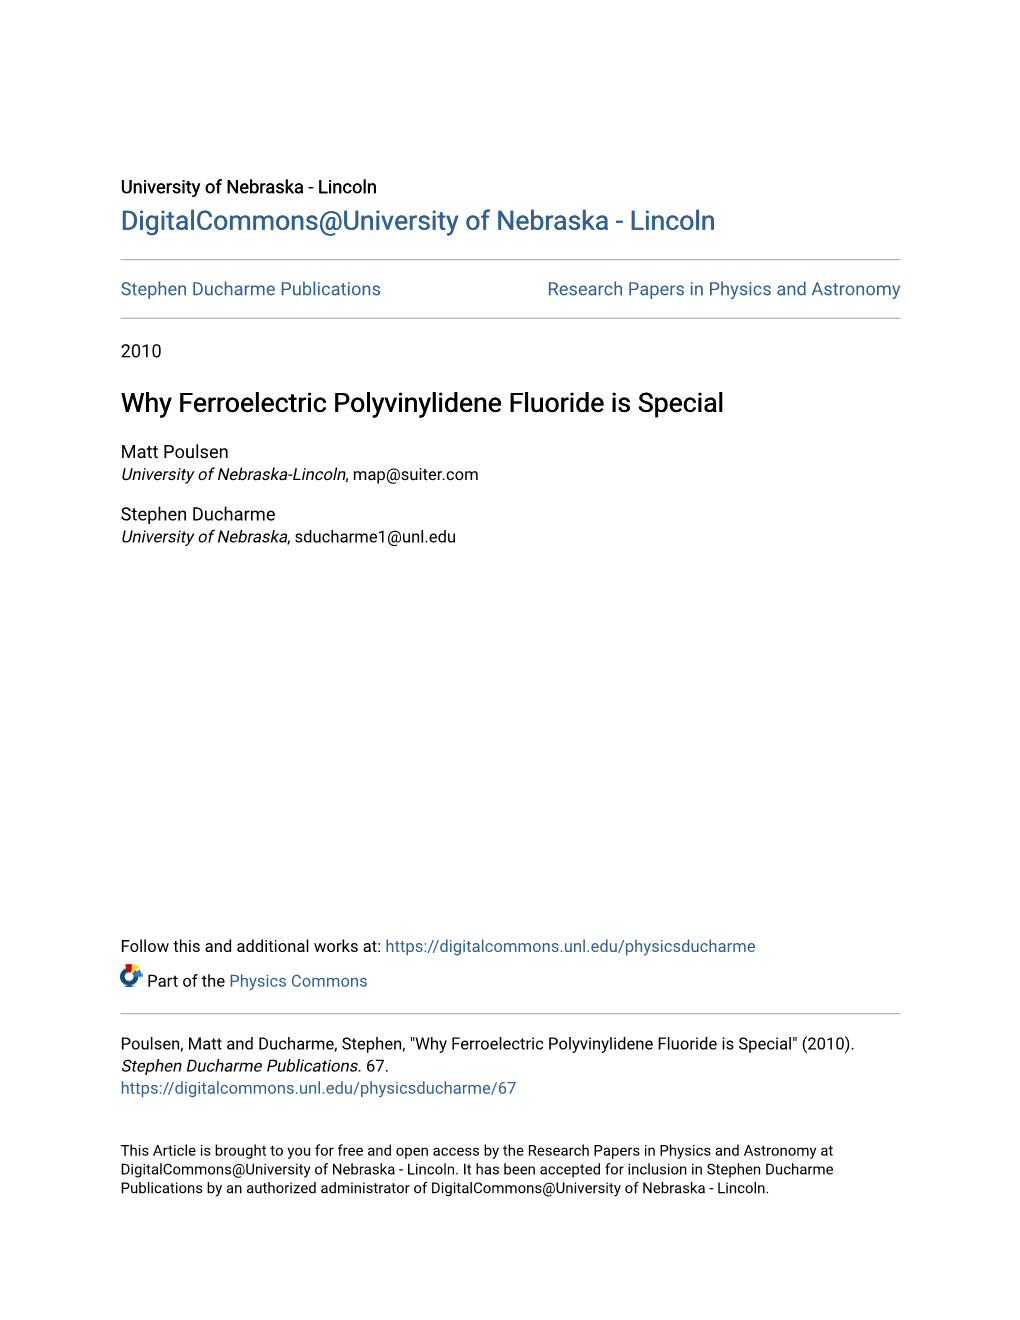 Why Ferroelectric Polyvinylidene Fluoride Is Special